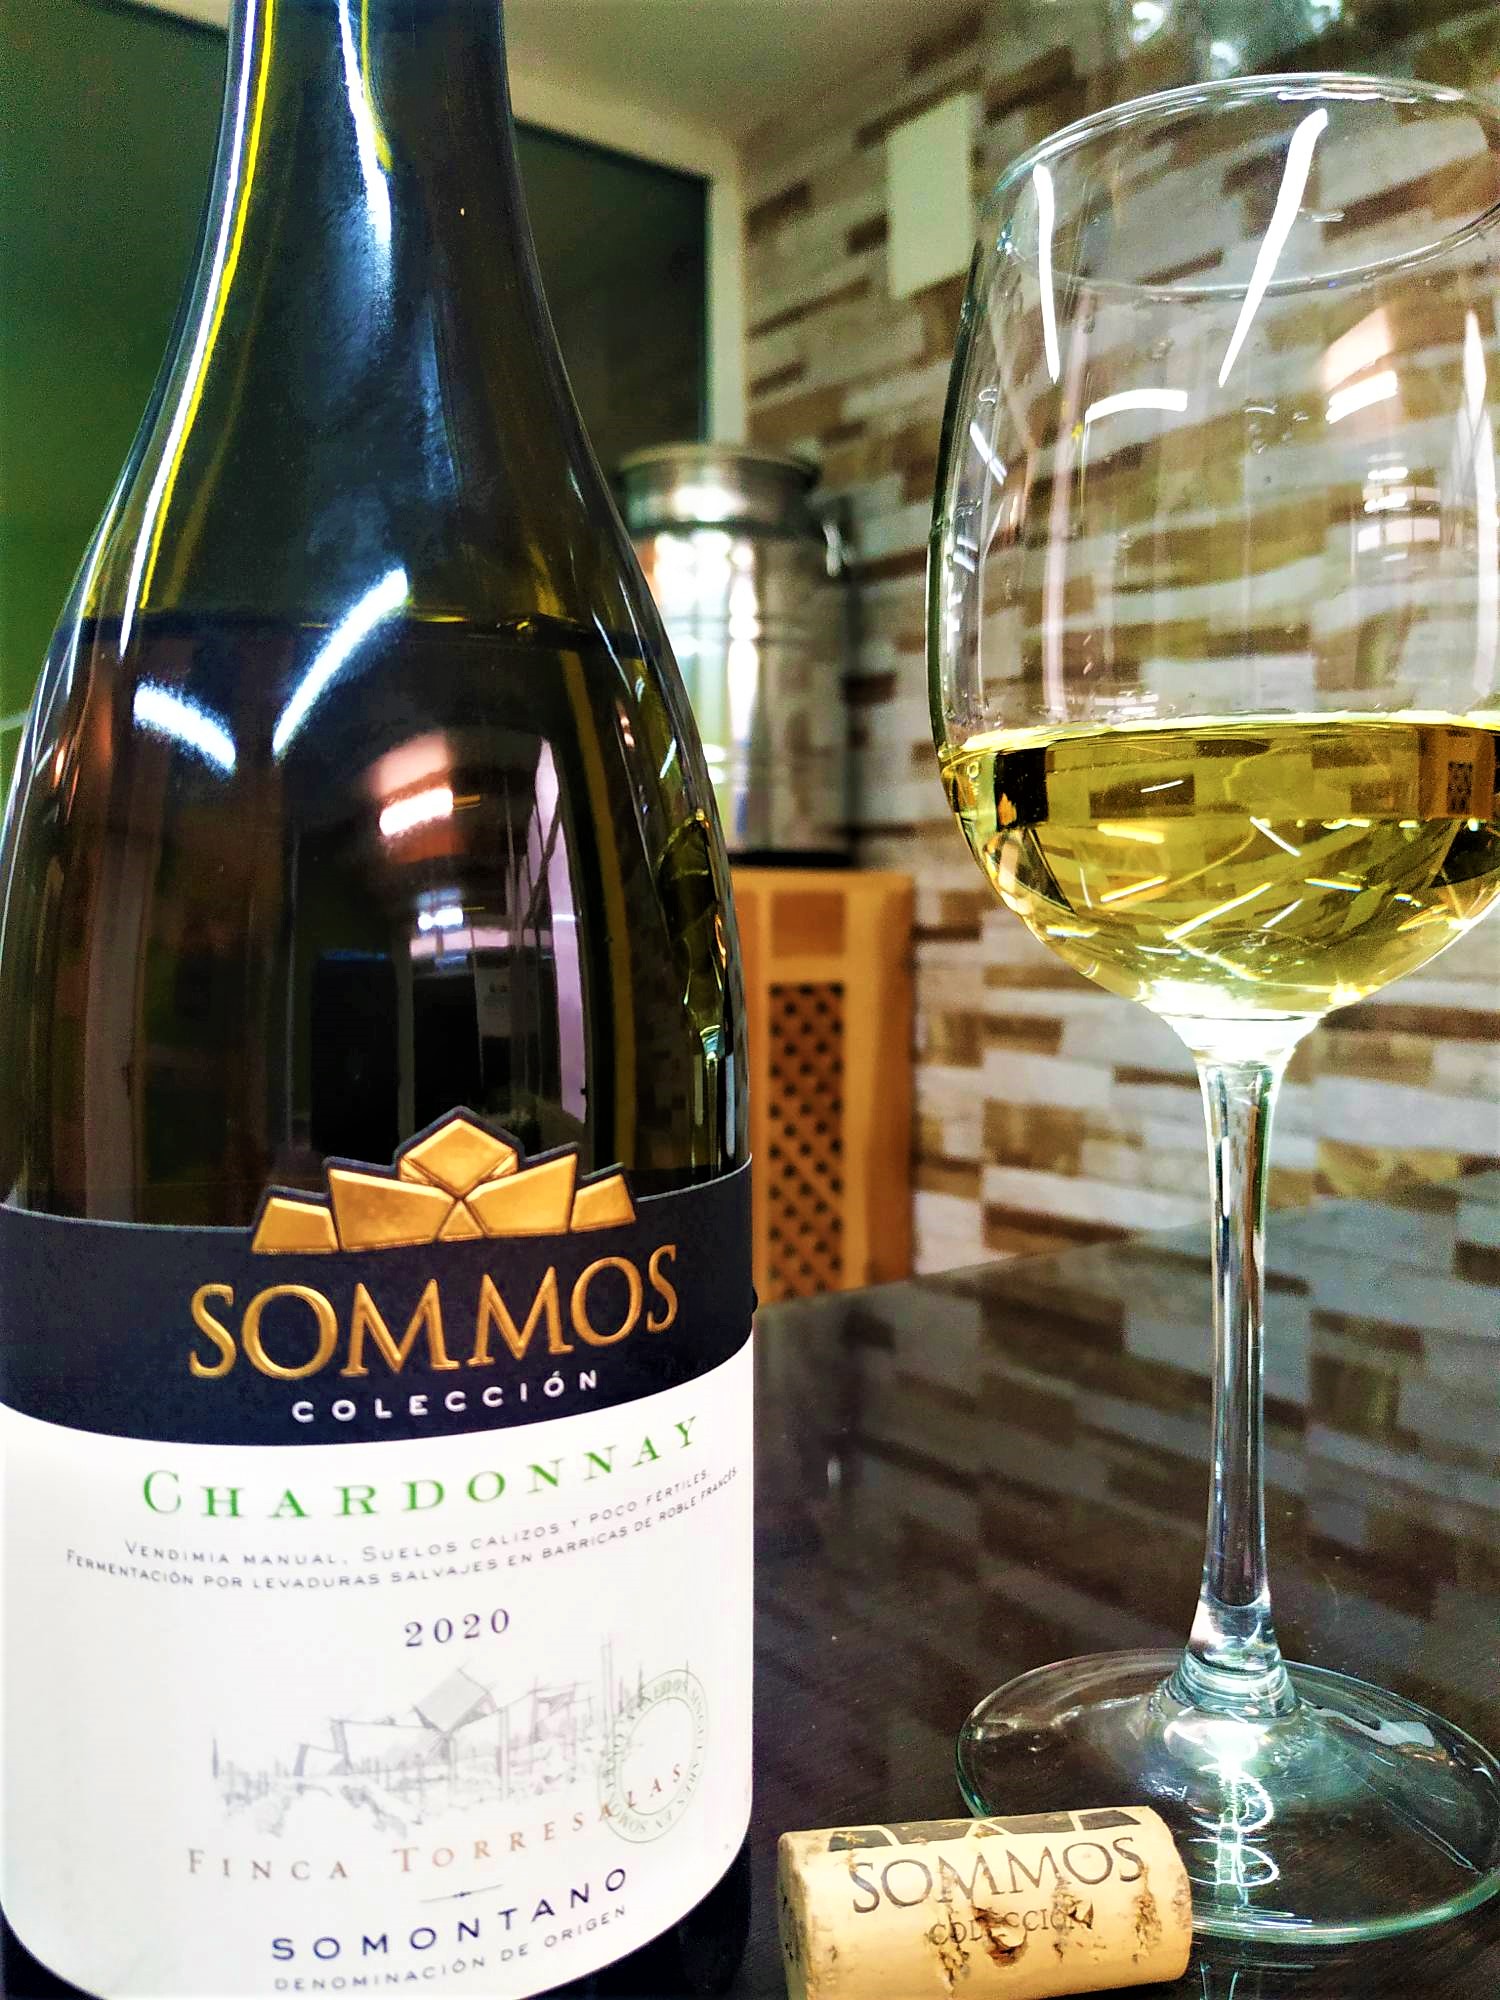 SOMMOS Colección Chardonnay 2020